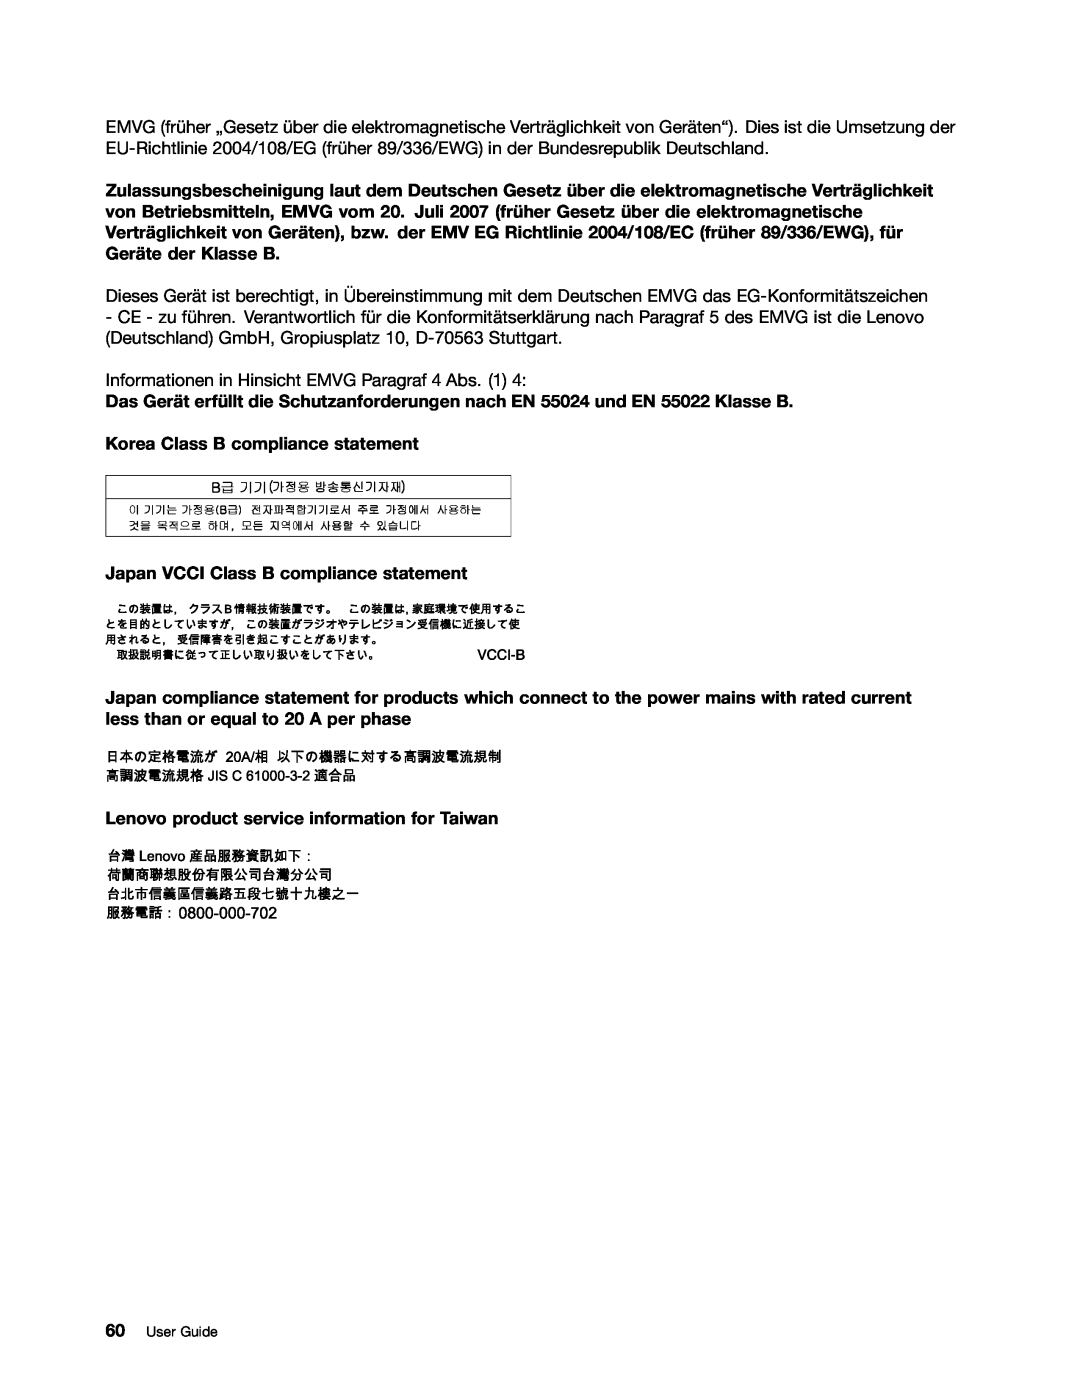 Lenovo B480, B580 manual Korea Class B compliance statement, Japan VCCI Class B compliance statement 